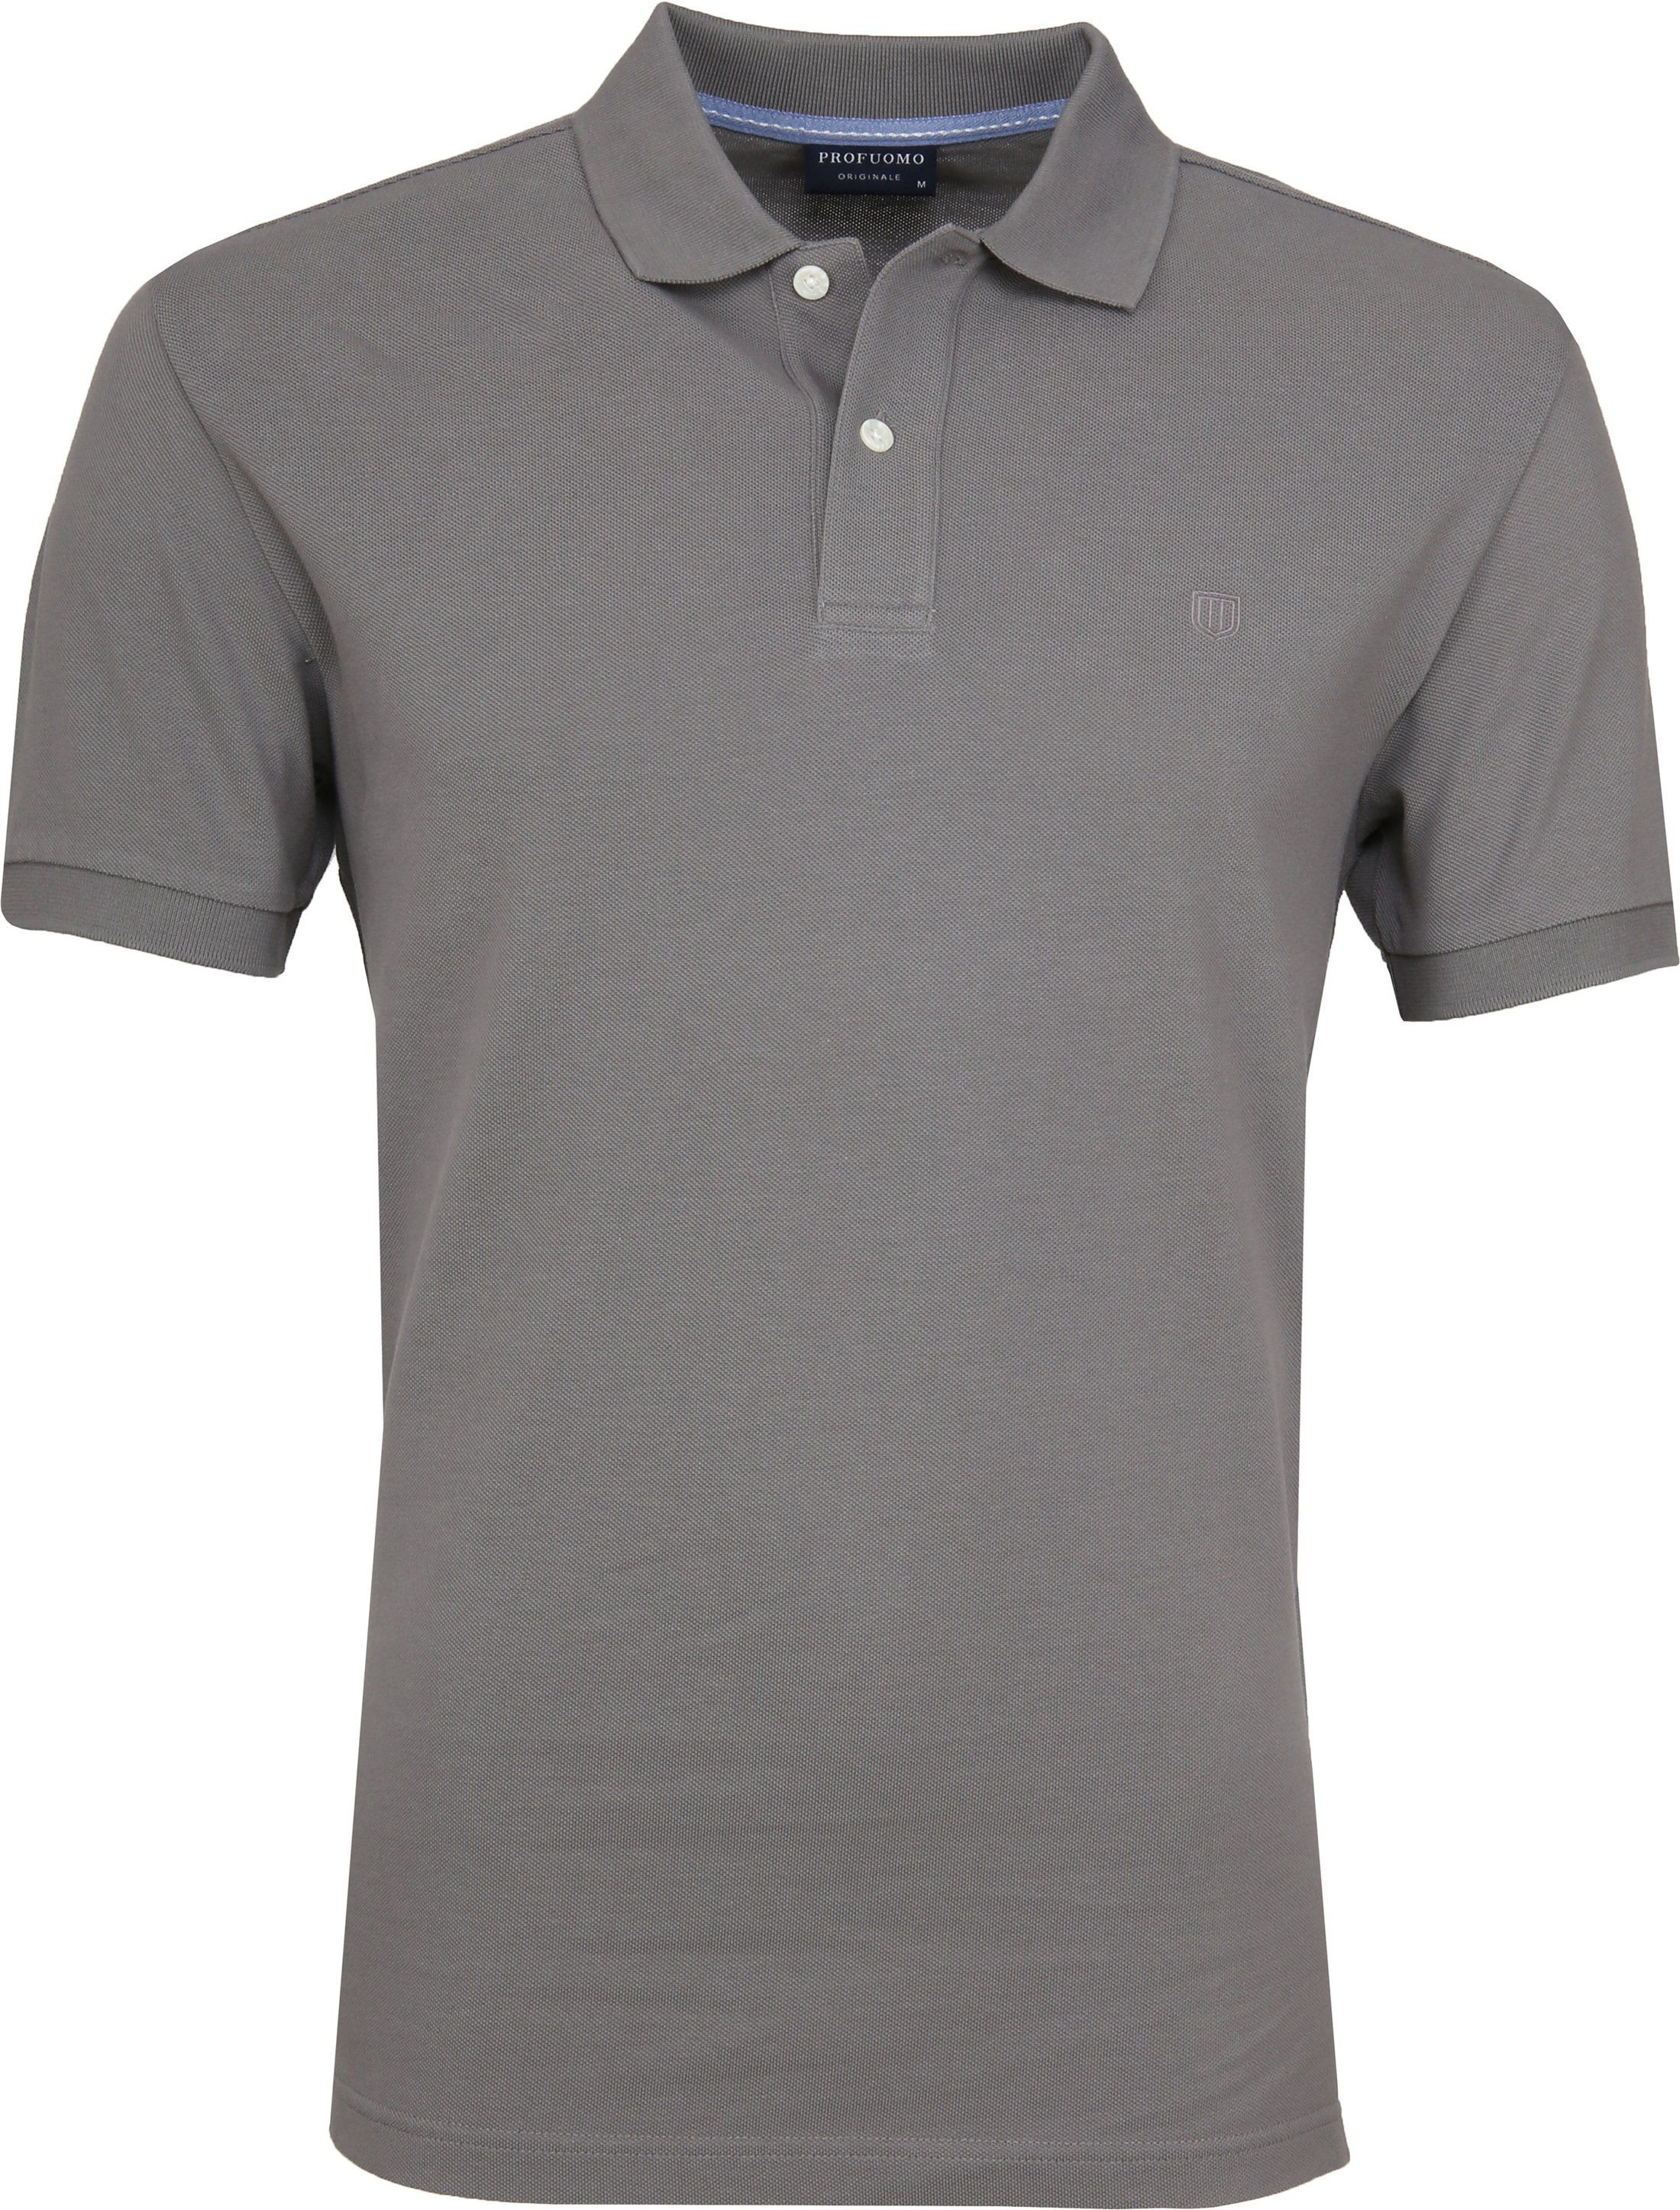 Profuomo Short Sleeve Poloshirt Grey size S